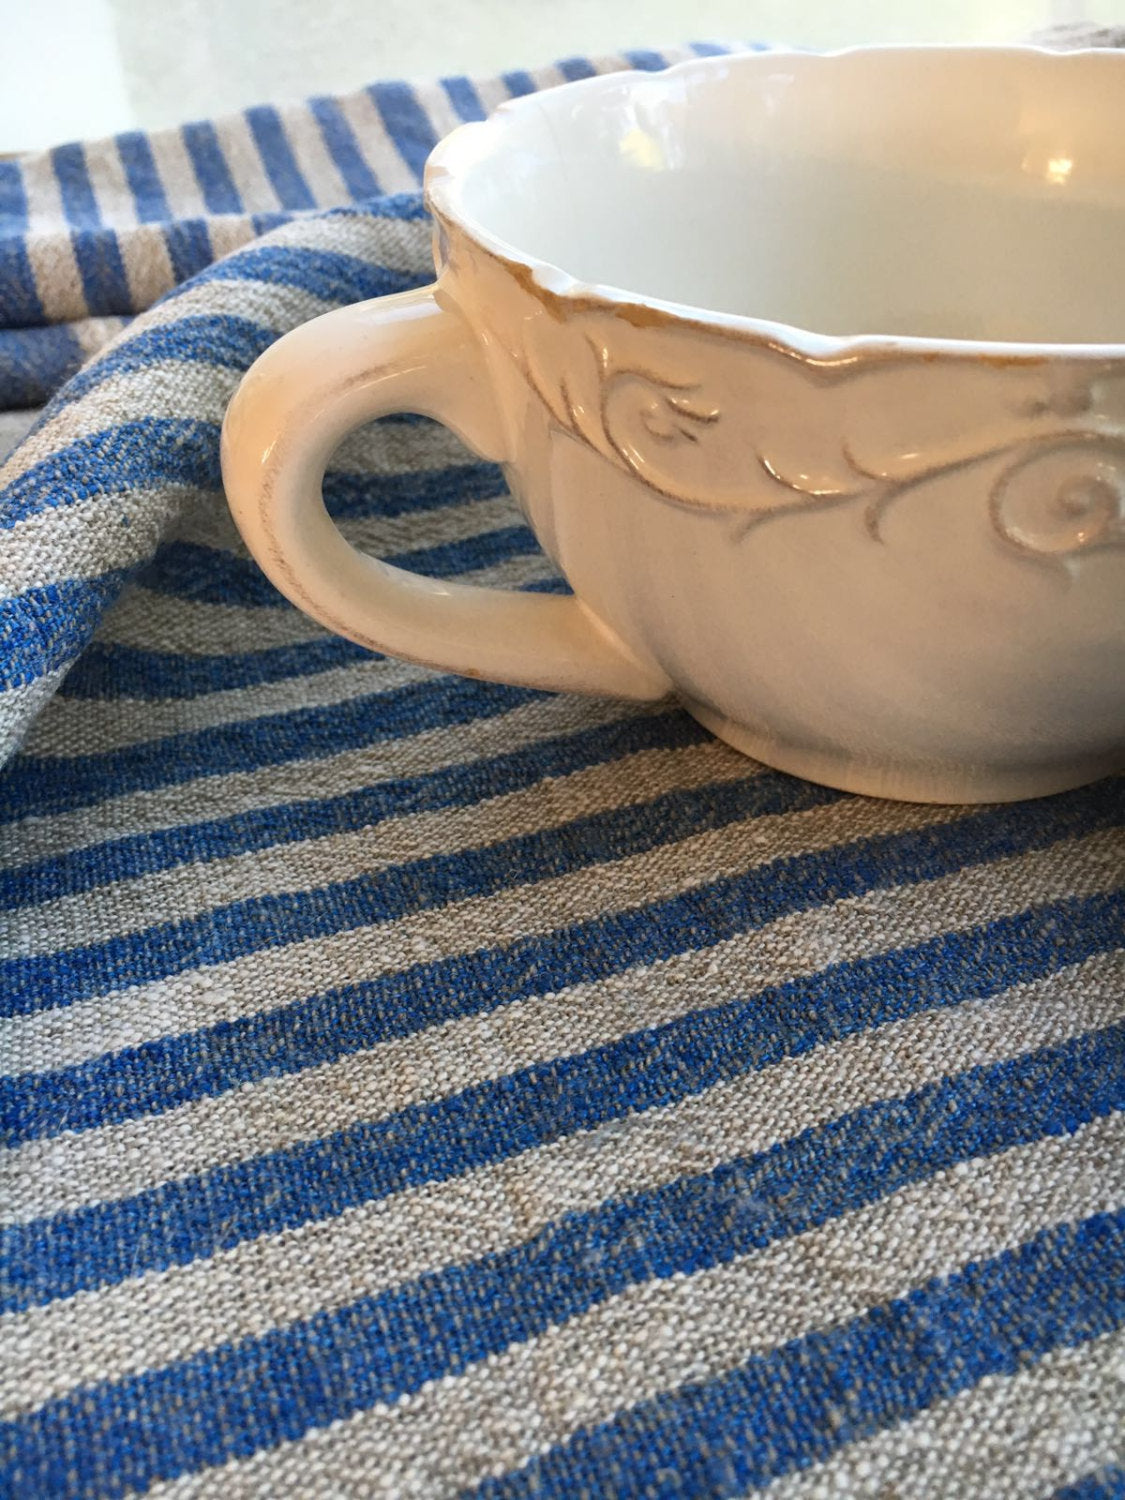 Set of 2 Linen Dish, Tea, Kitchen Towels Blue White Check. Linen cotton mix  kitchen towel. Country style dish towels. Large size 63x89cm